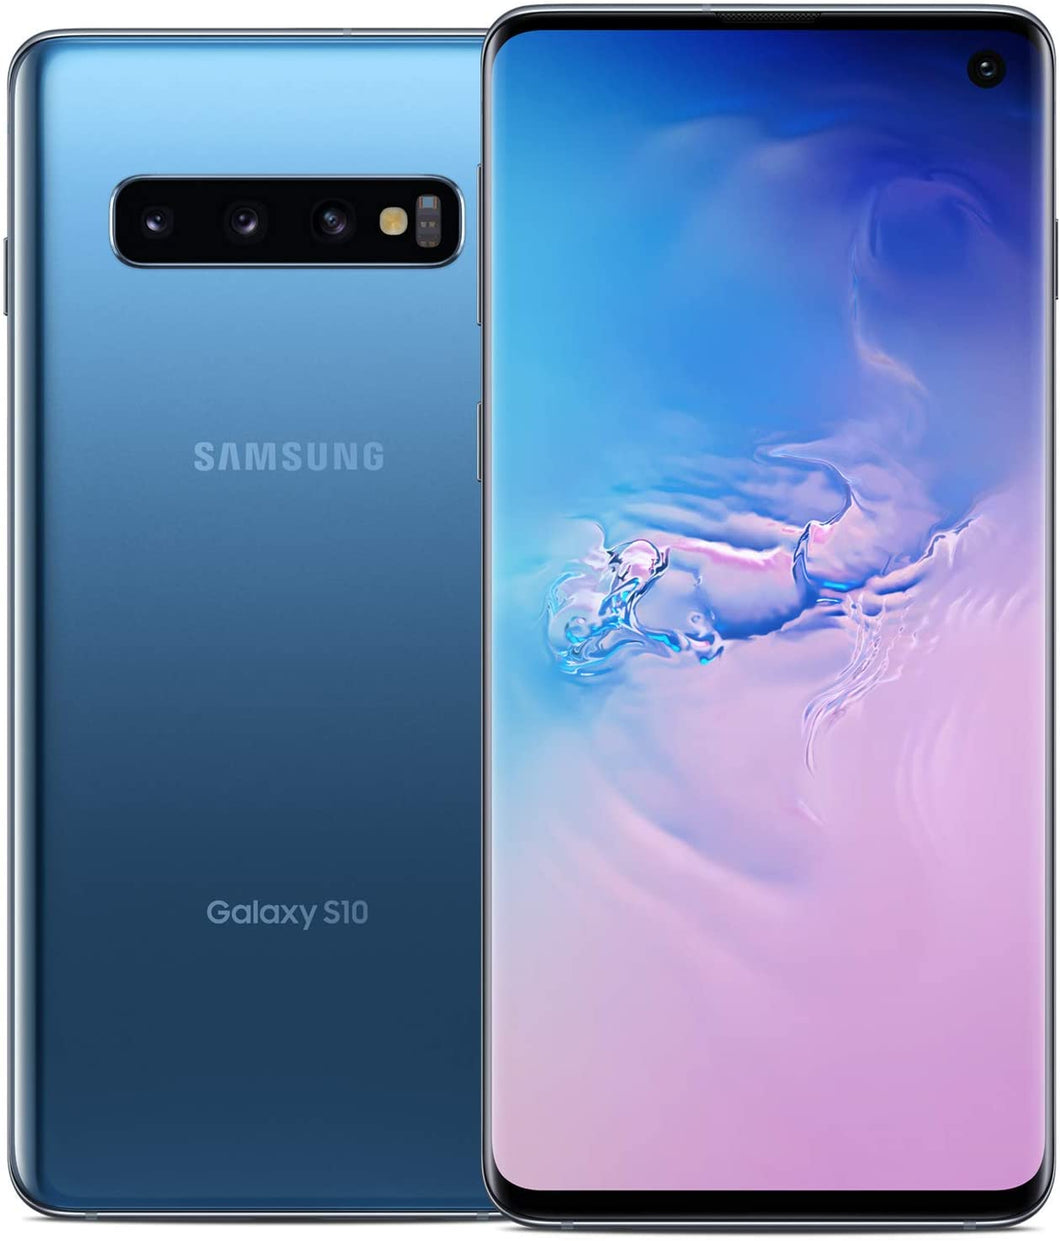 Samsung Galaxy S10, 128GB, Prism Blue - Fully Unlocked (Renewed)